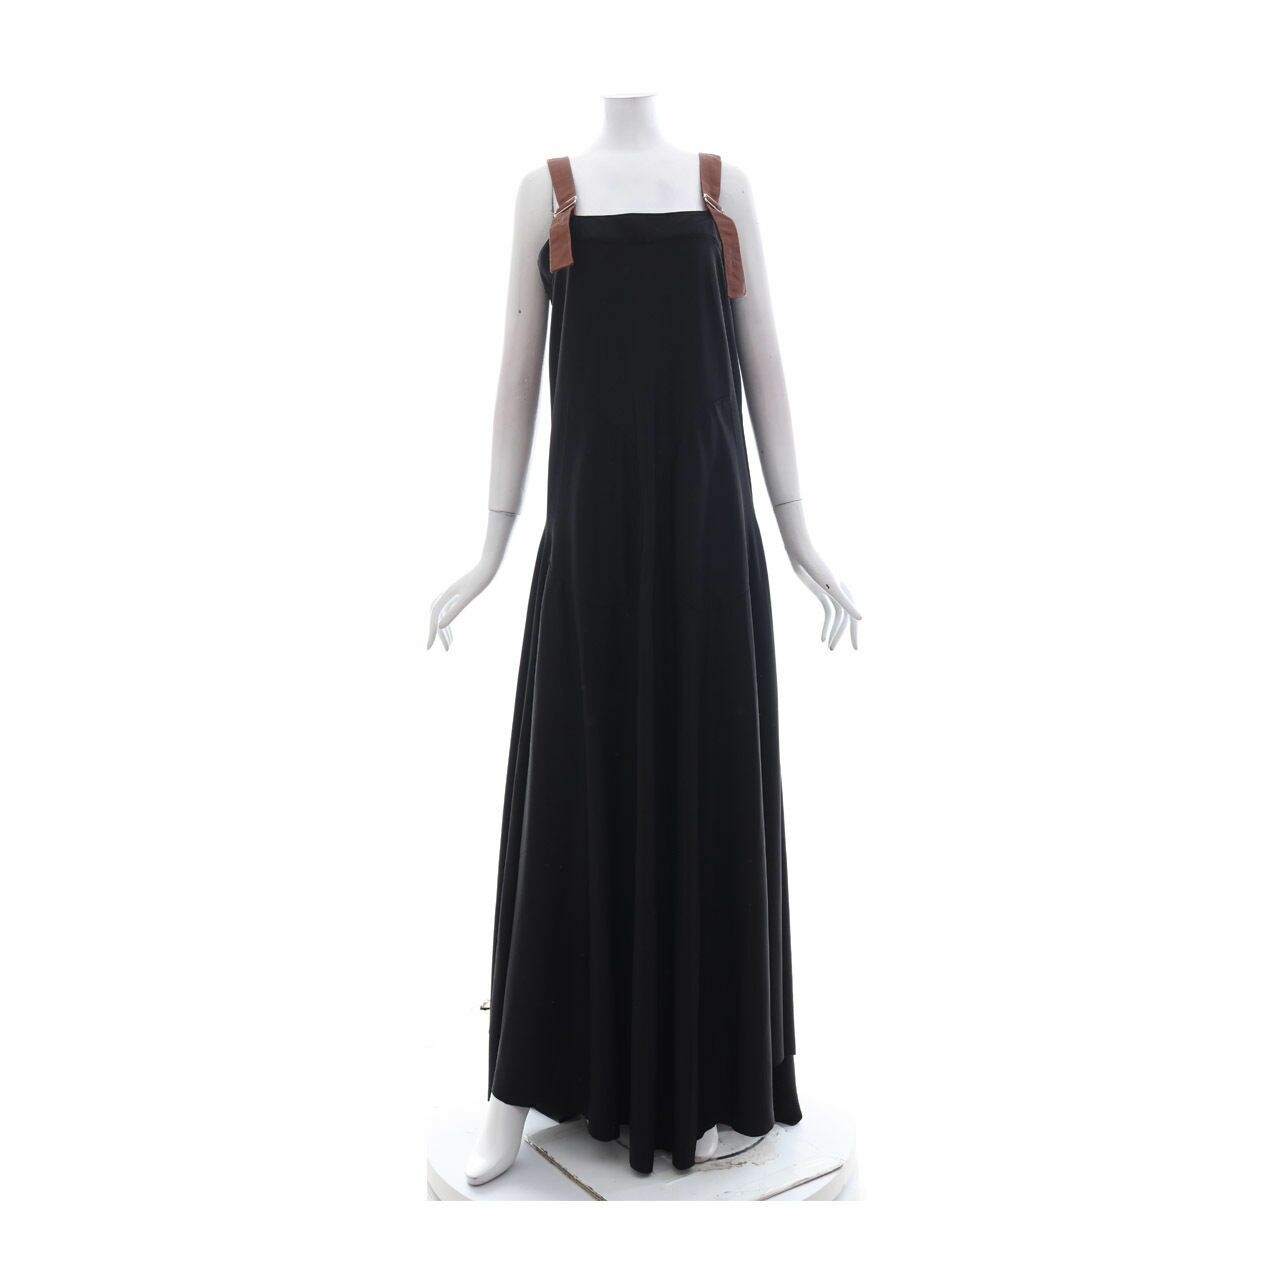 Aleabe Black Long Dress